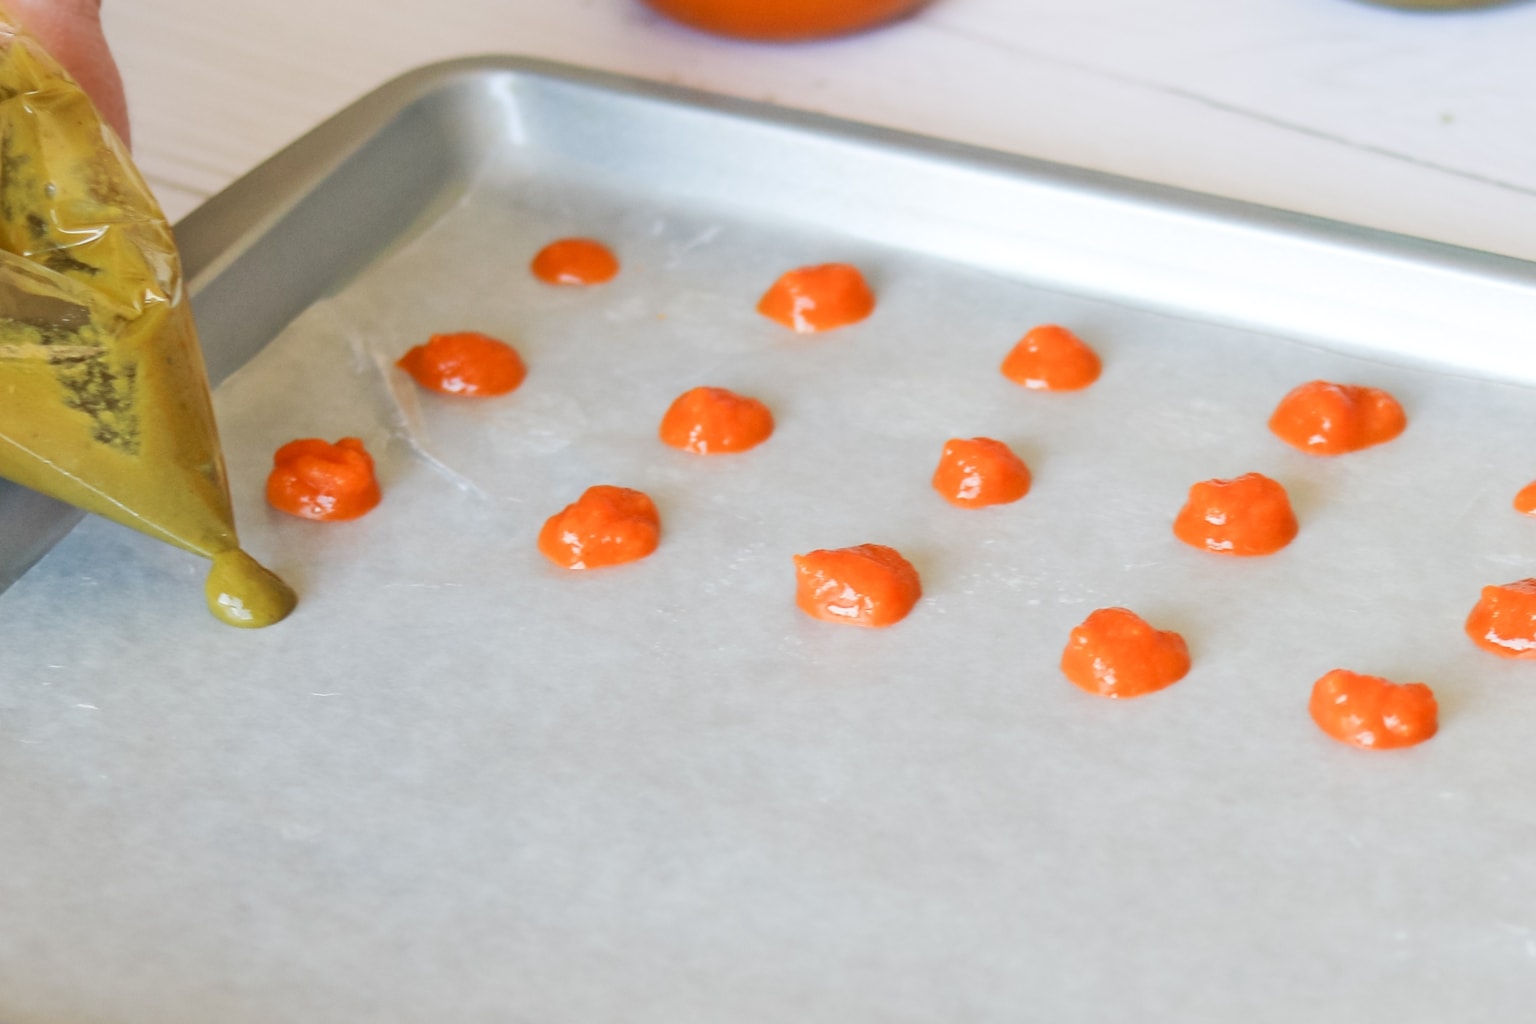 piping small dots of baby food onto lined baking sheet